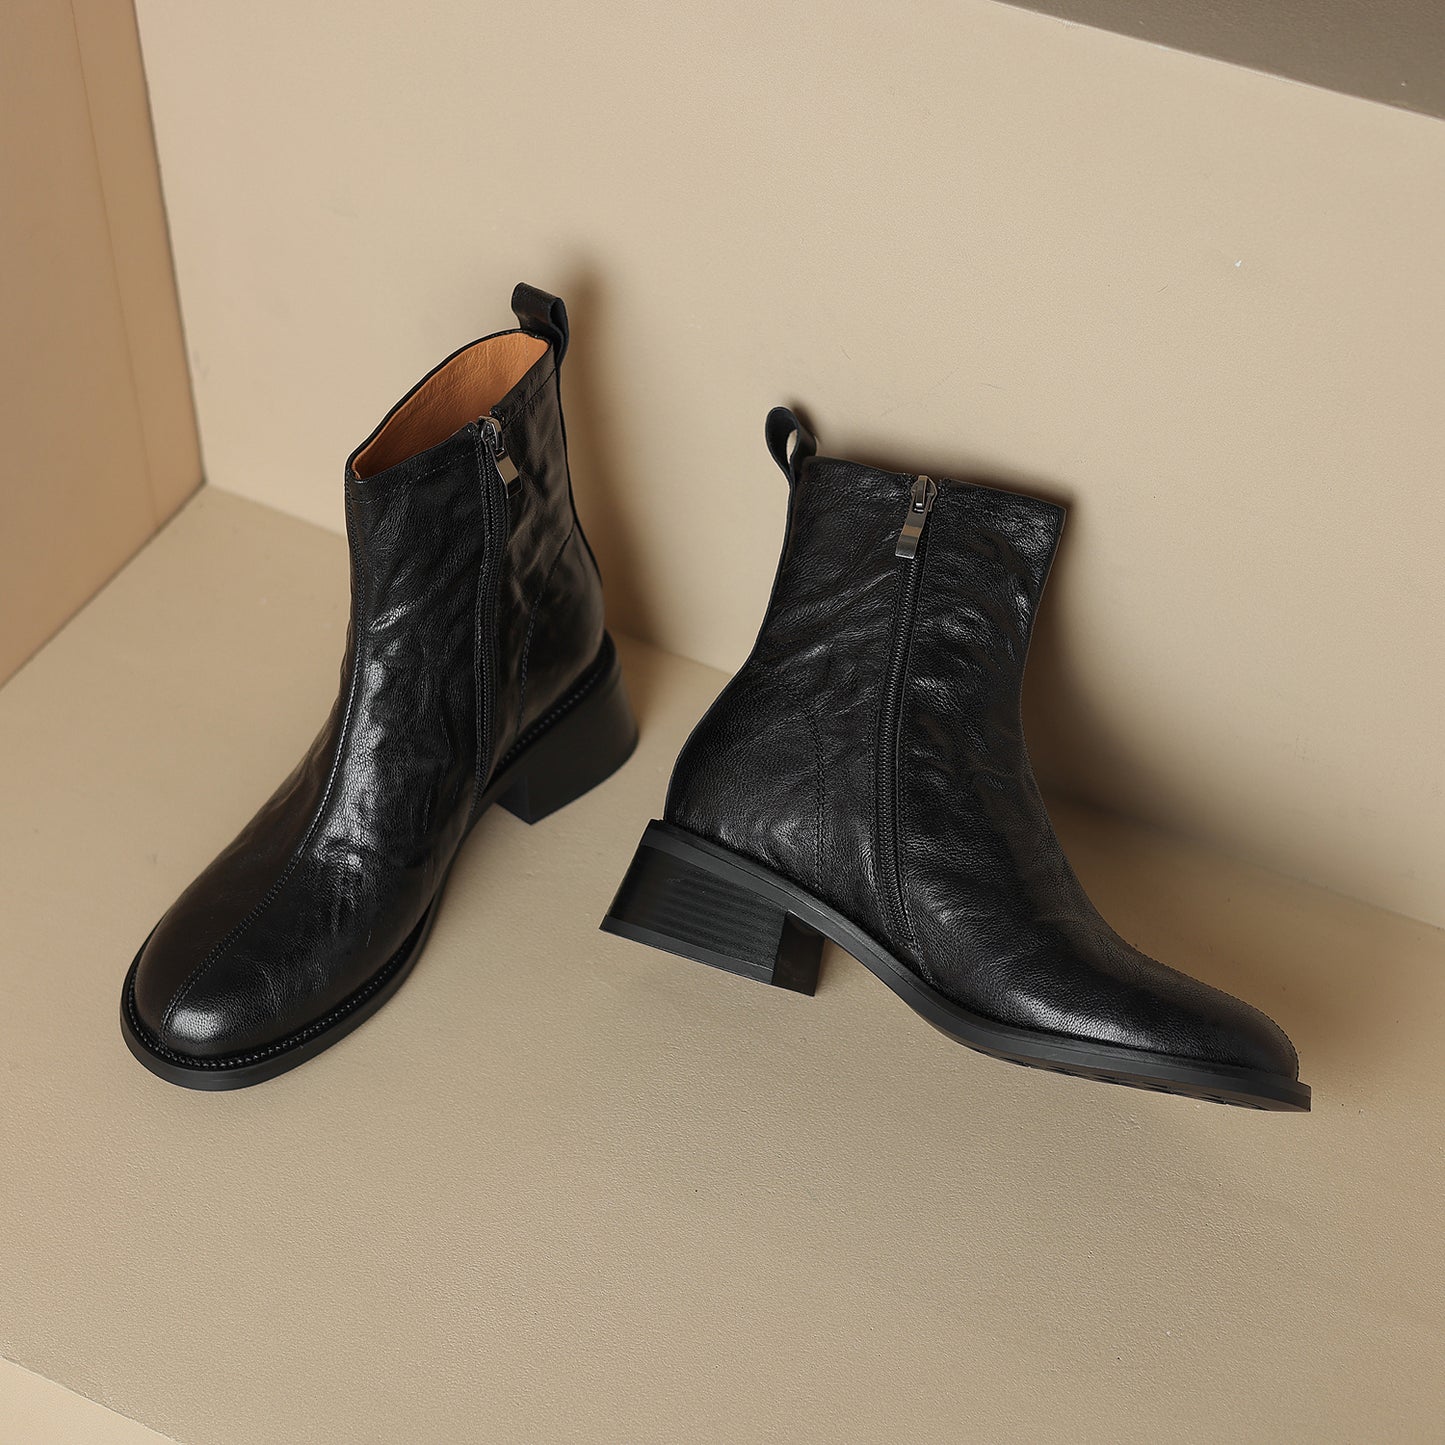 TinaCus Side Zip Up Women's Genuine Leather Block Heel Handmade Ankle Boots